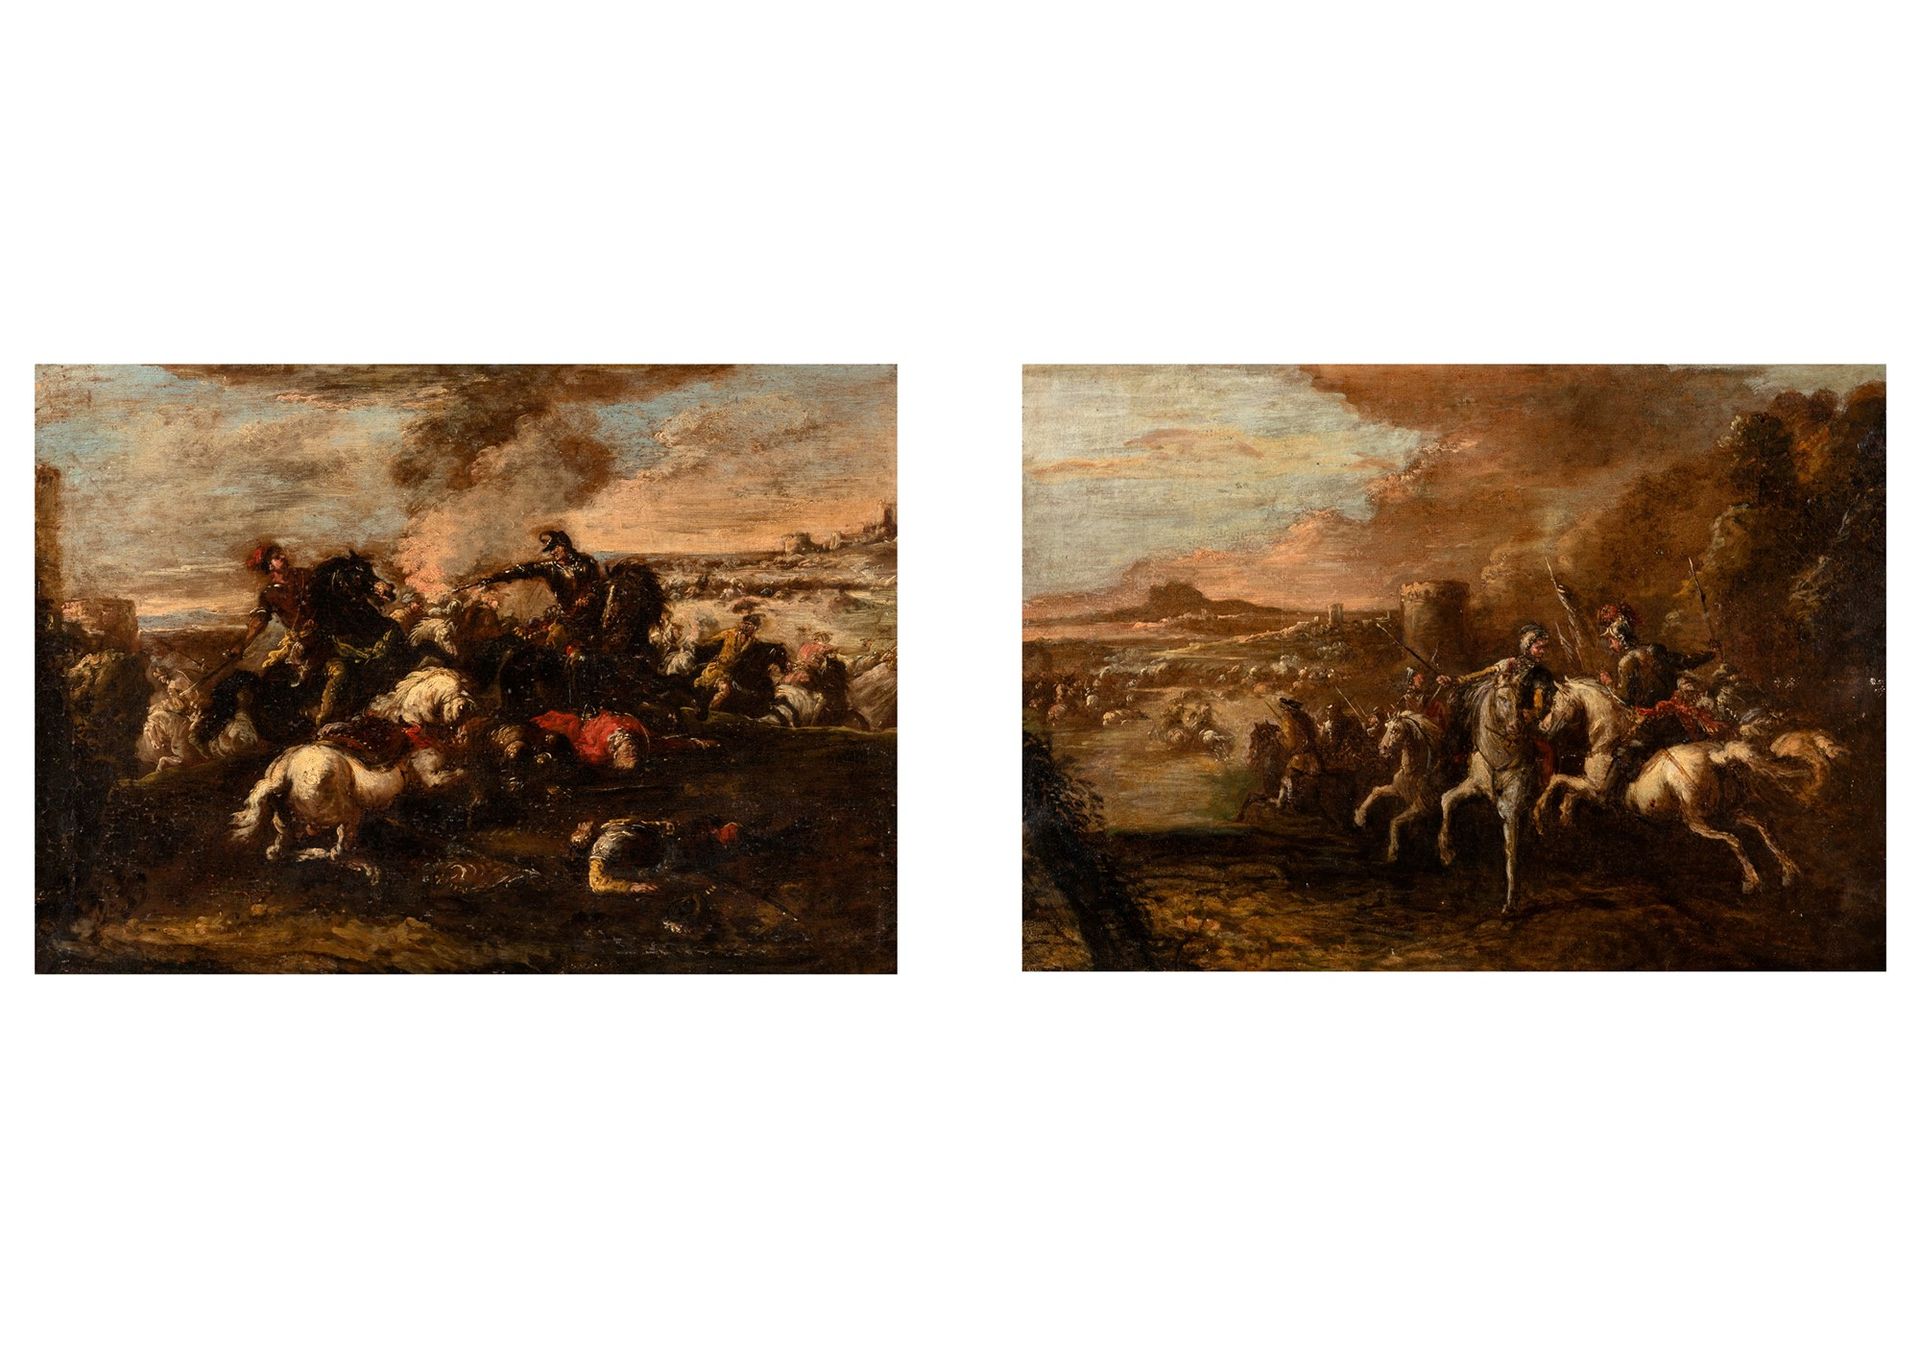 Scuola italiana, secolo XVII 两个战斗场景

布面油画
40 x 55 cm (每个)